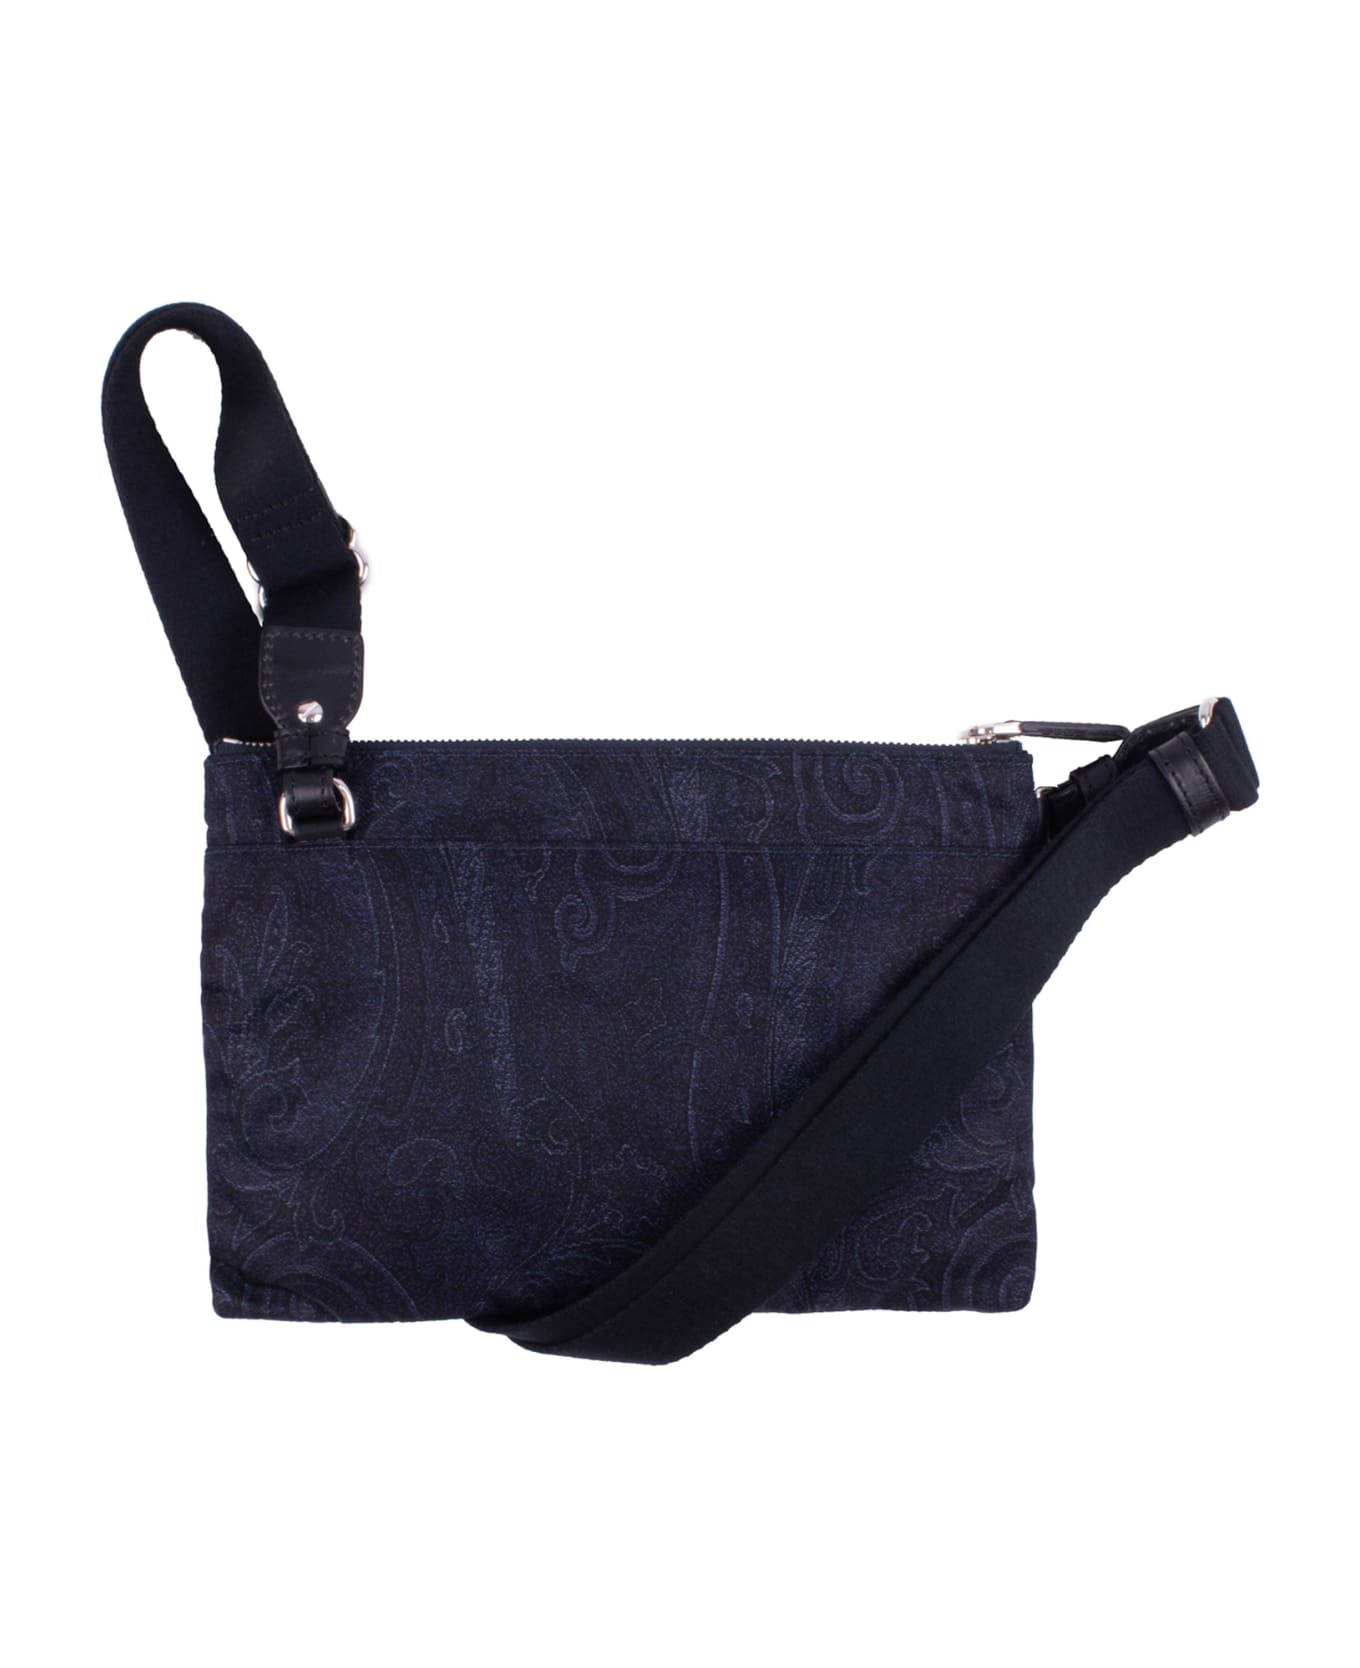 Etro Nylon Shoulder Bag - Blue